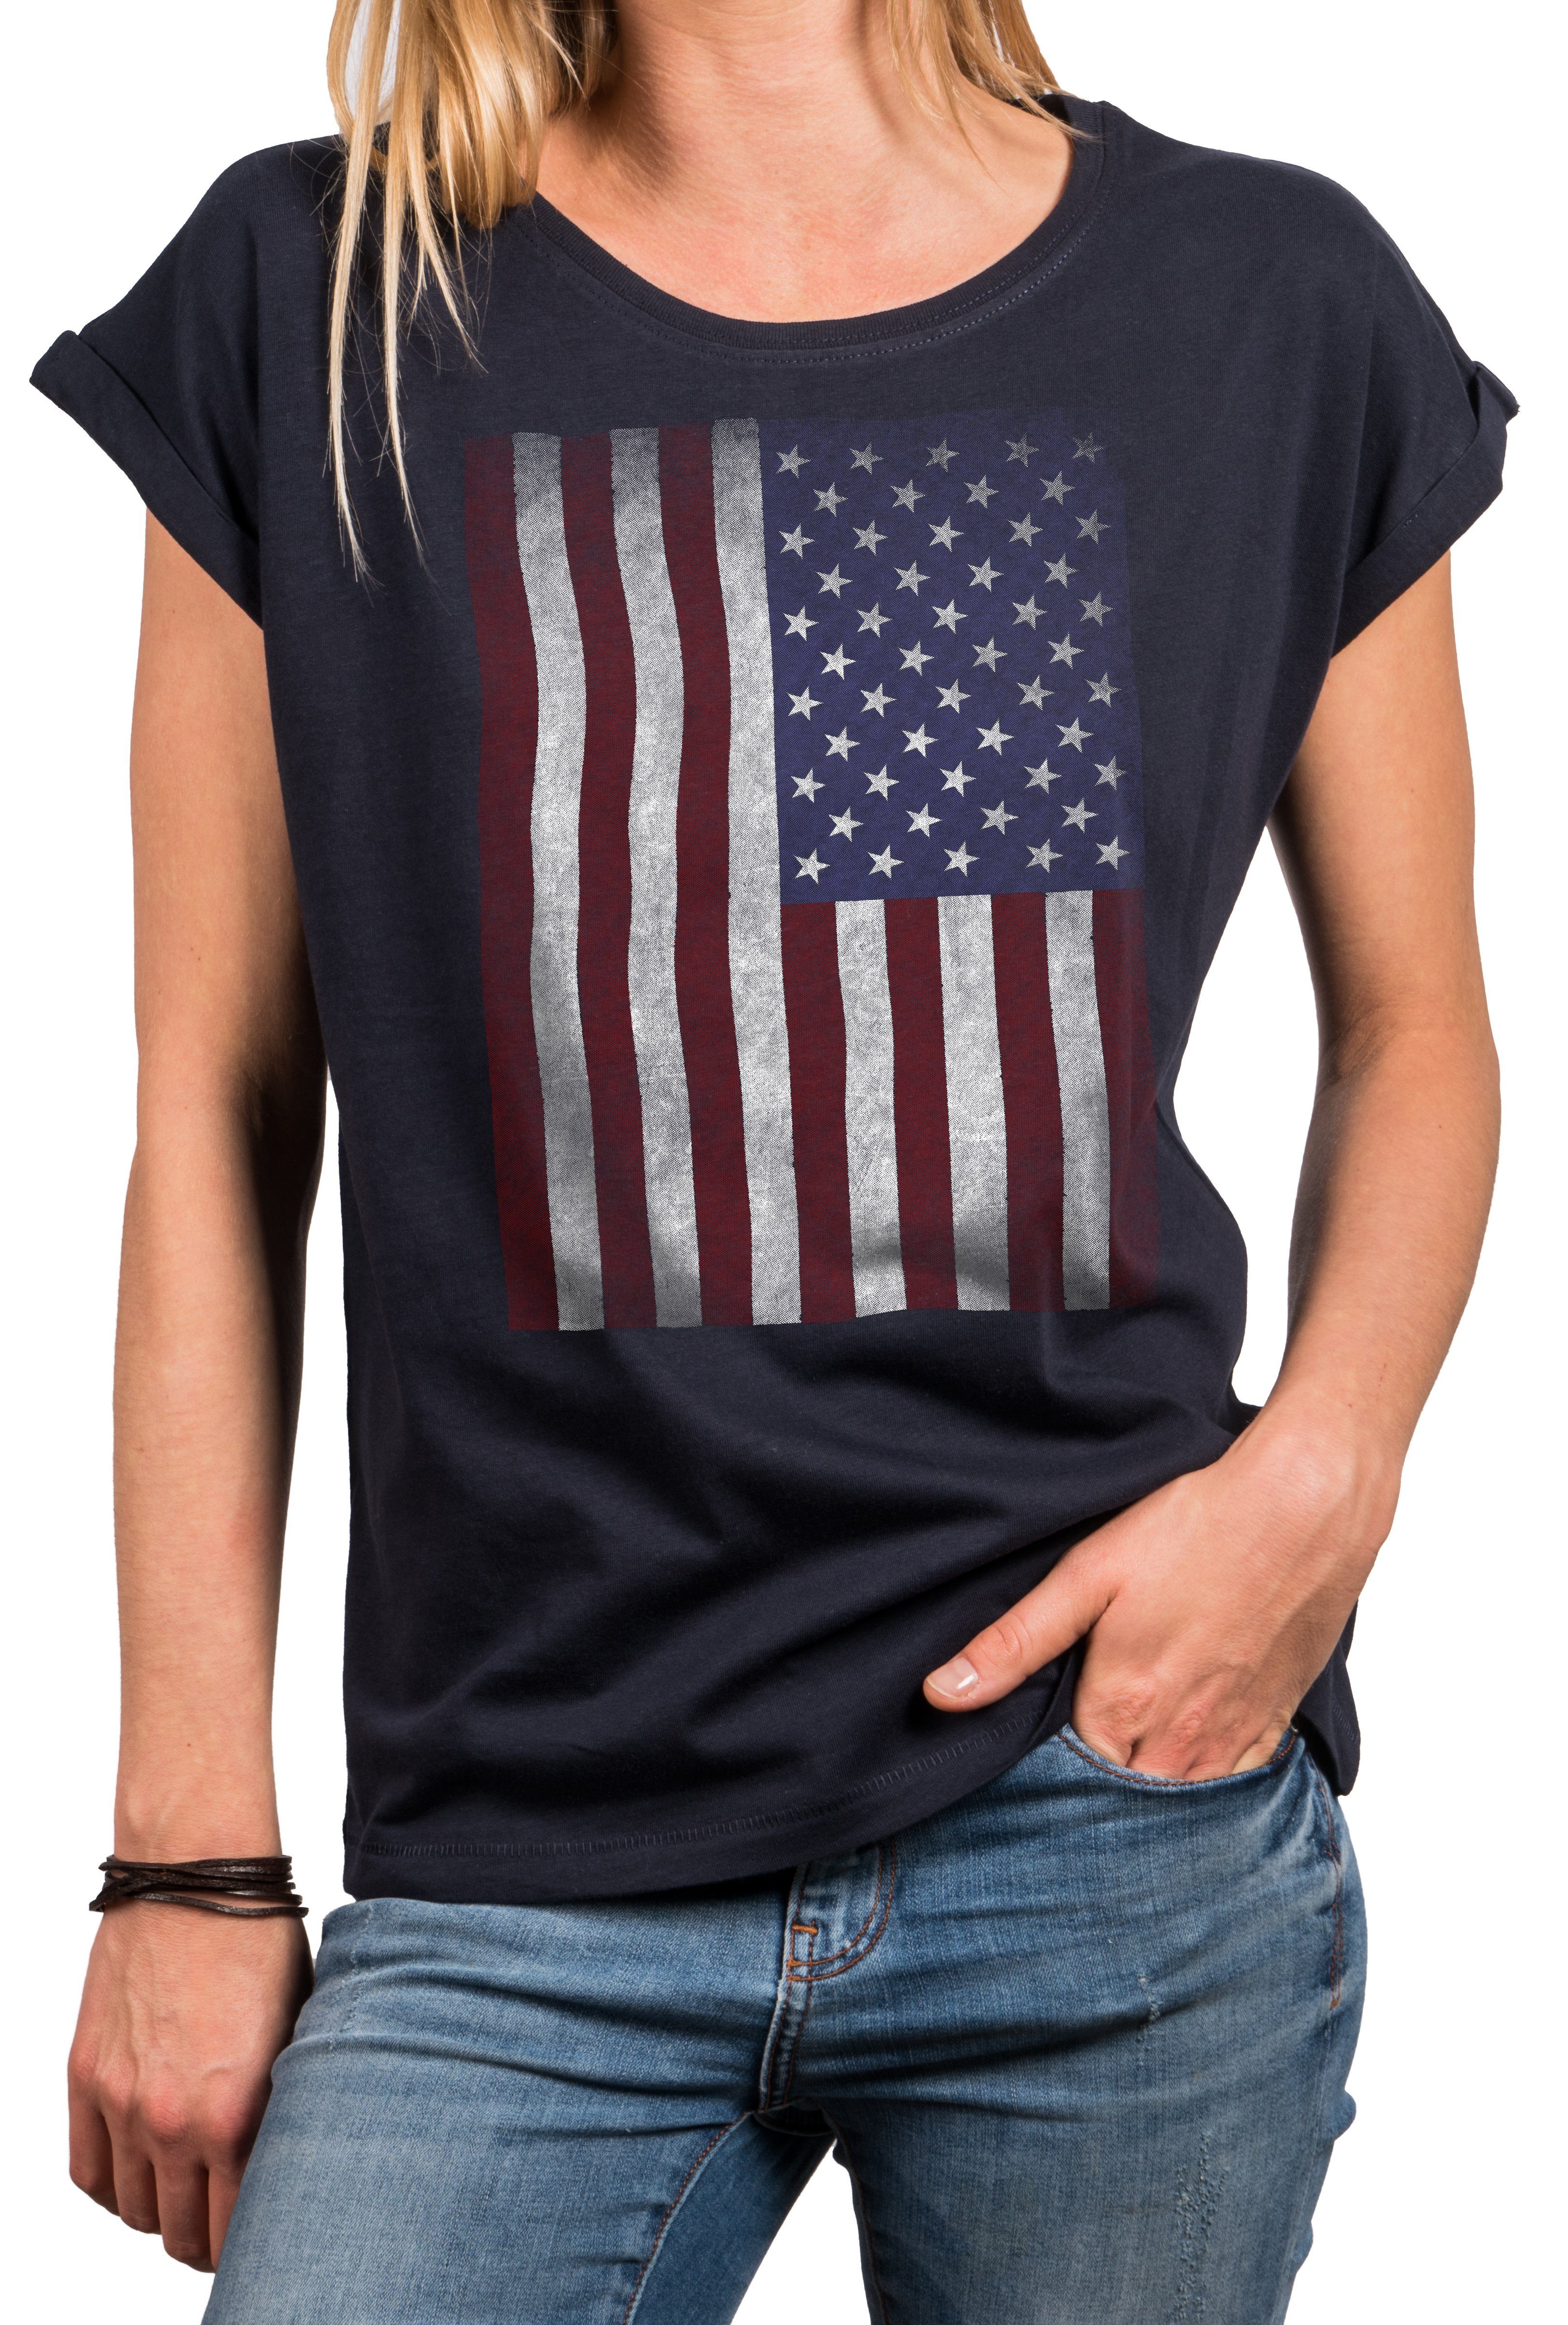 MAKAYA blau) grau, Tunika Baumwolle, Damen Top Fahne Oberteile schwarz, Vintage Flagge USA Print-Shirt (Kurzarm, Sommer Größen große Amerika